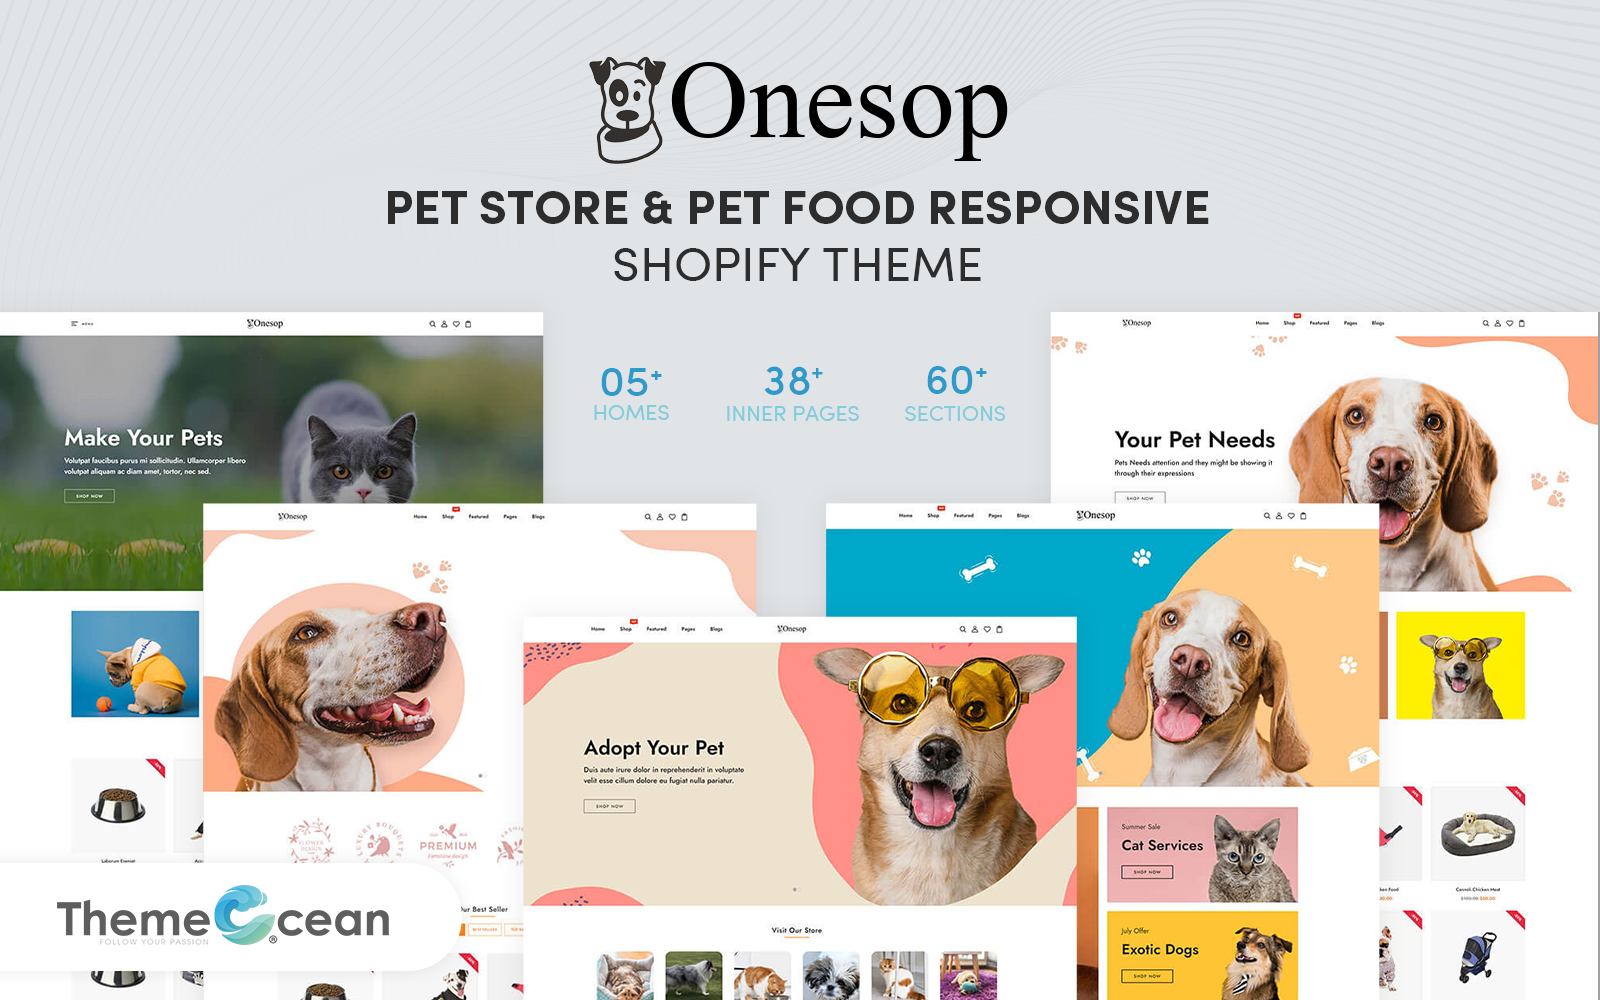 Onesop - Pet Store & Pet Food Responsive Shopify Theme